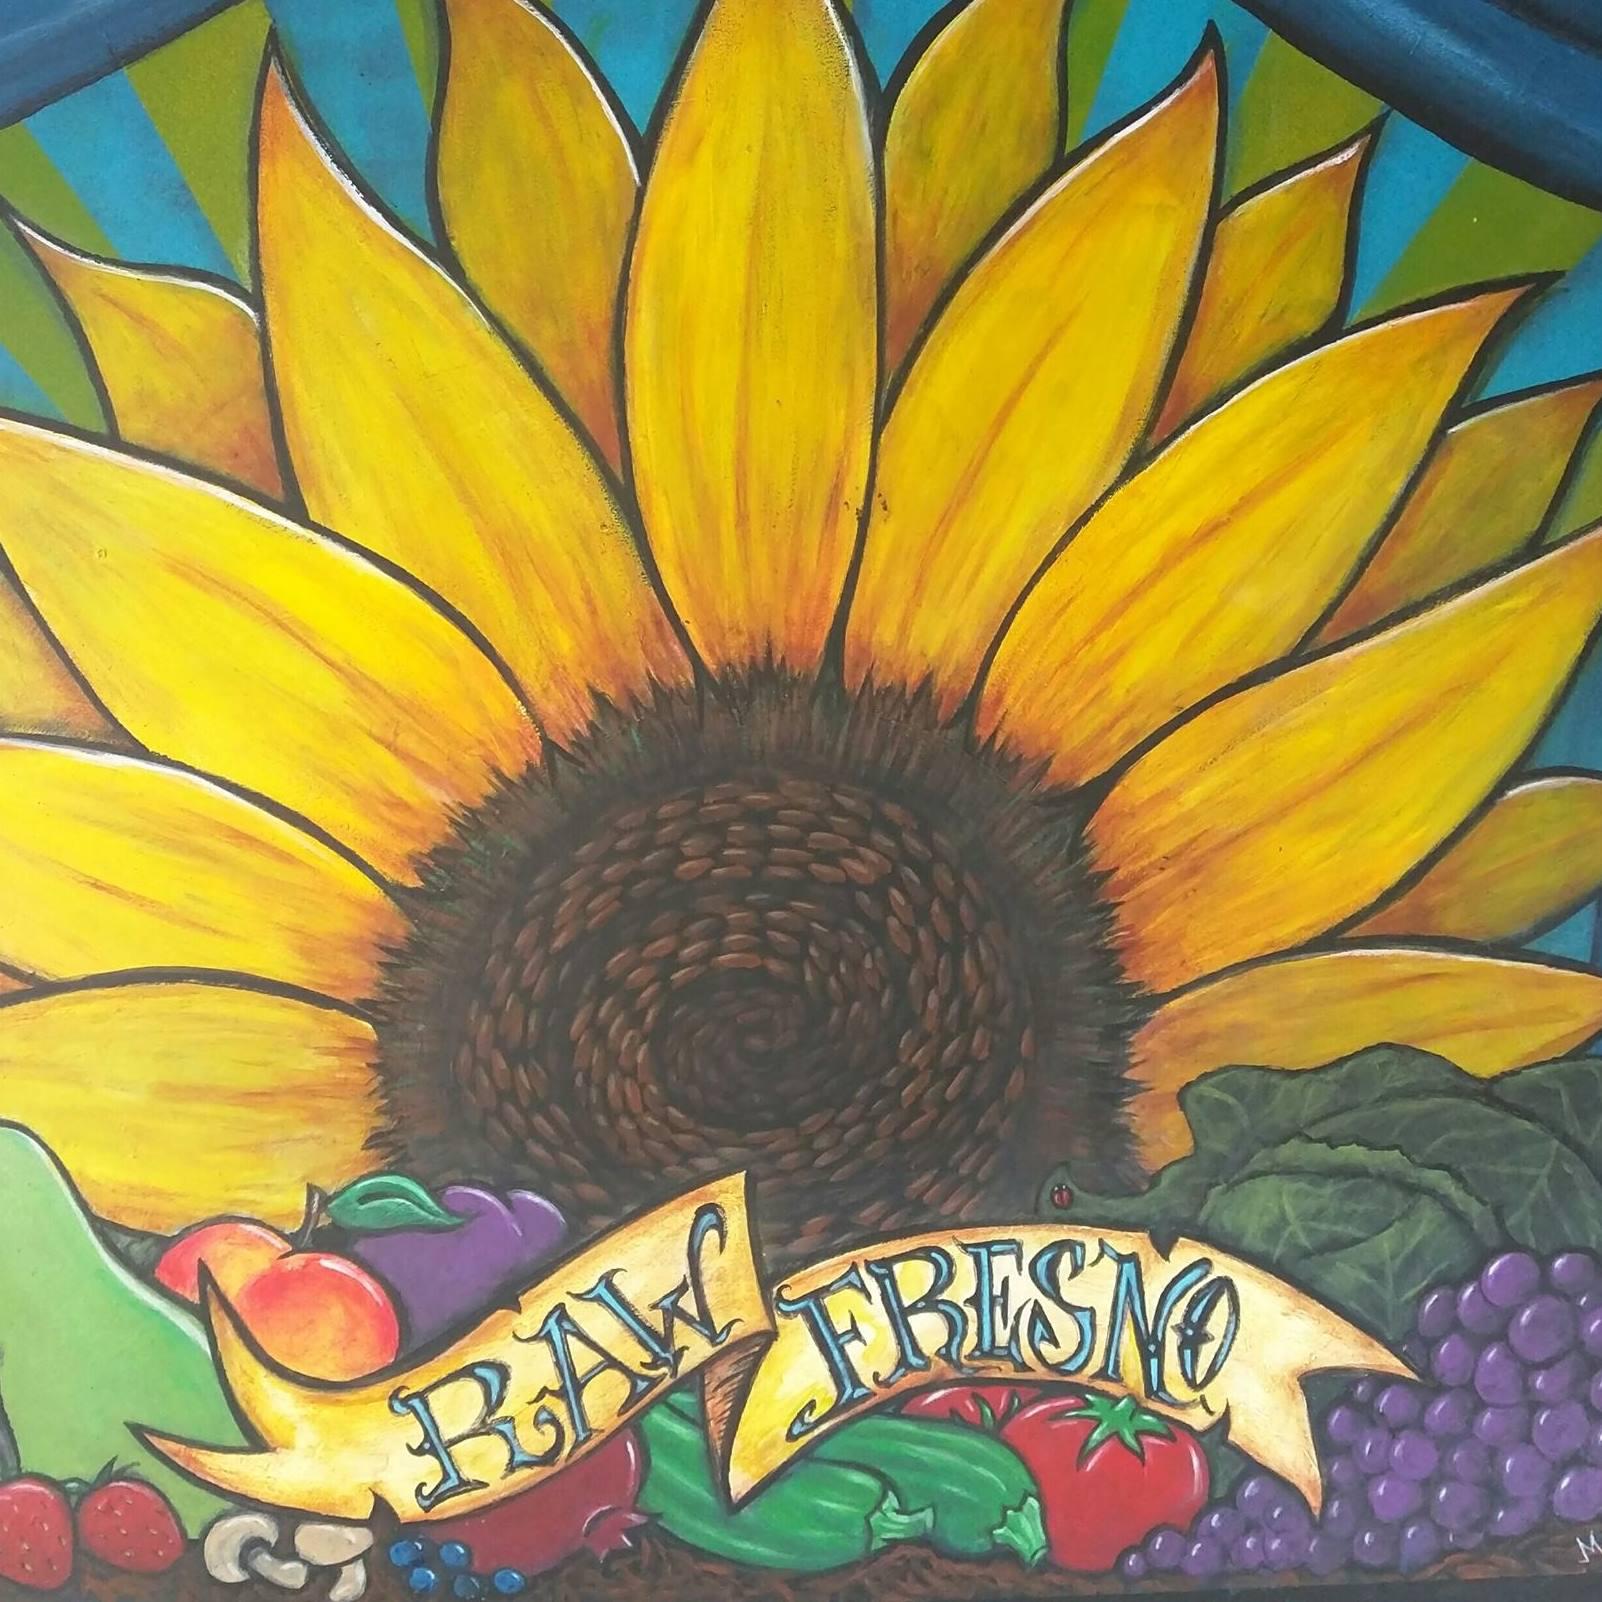 Vegan Fresno Fresno